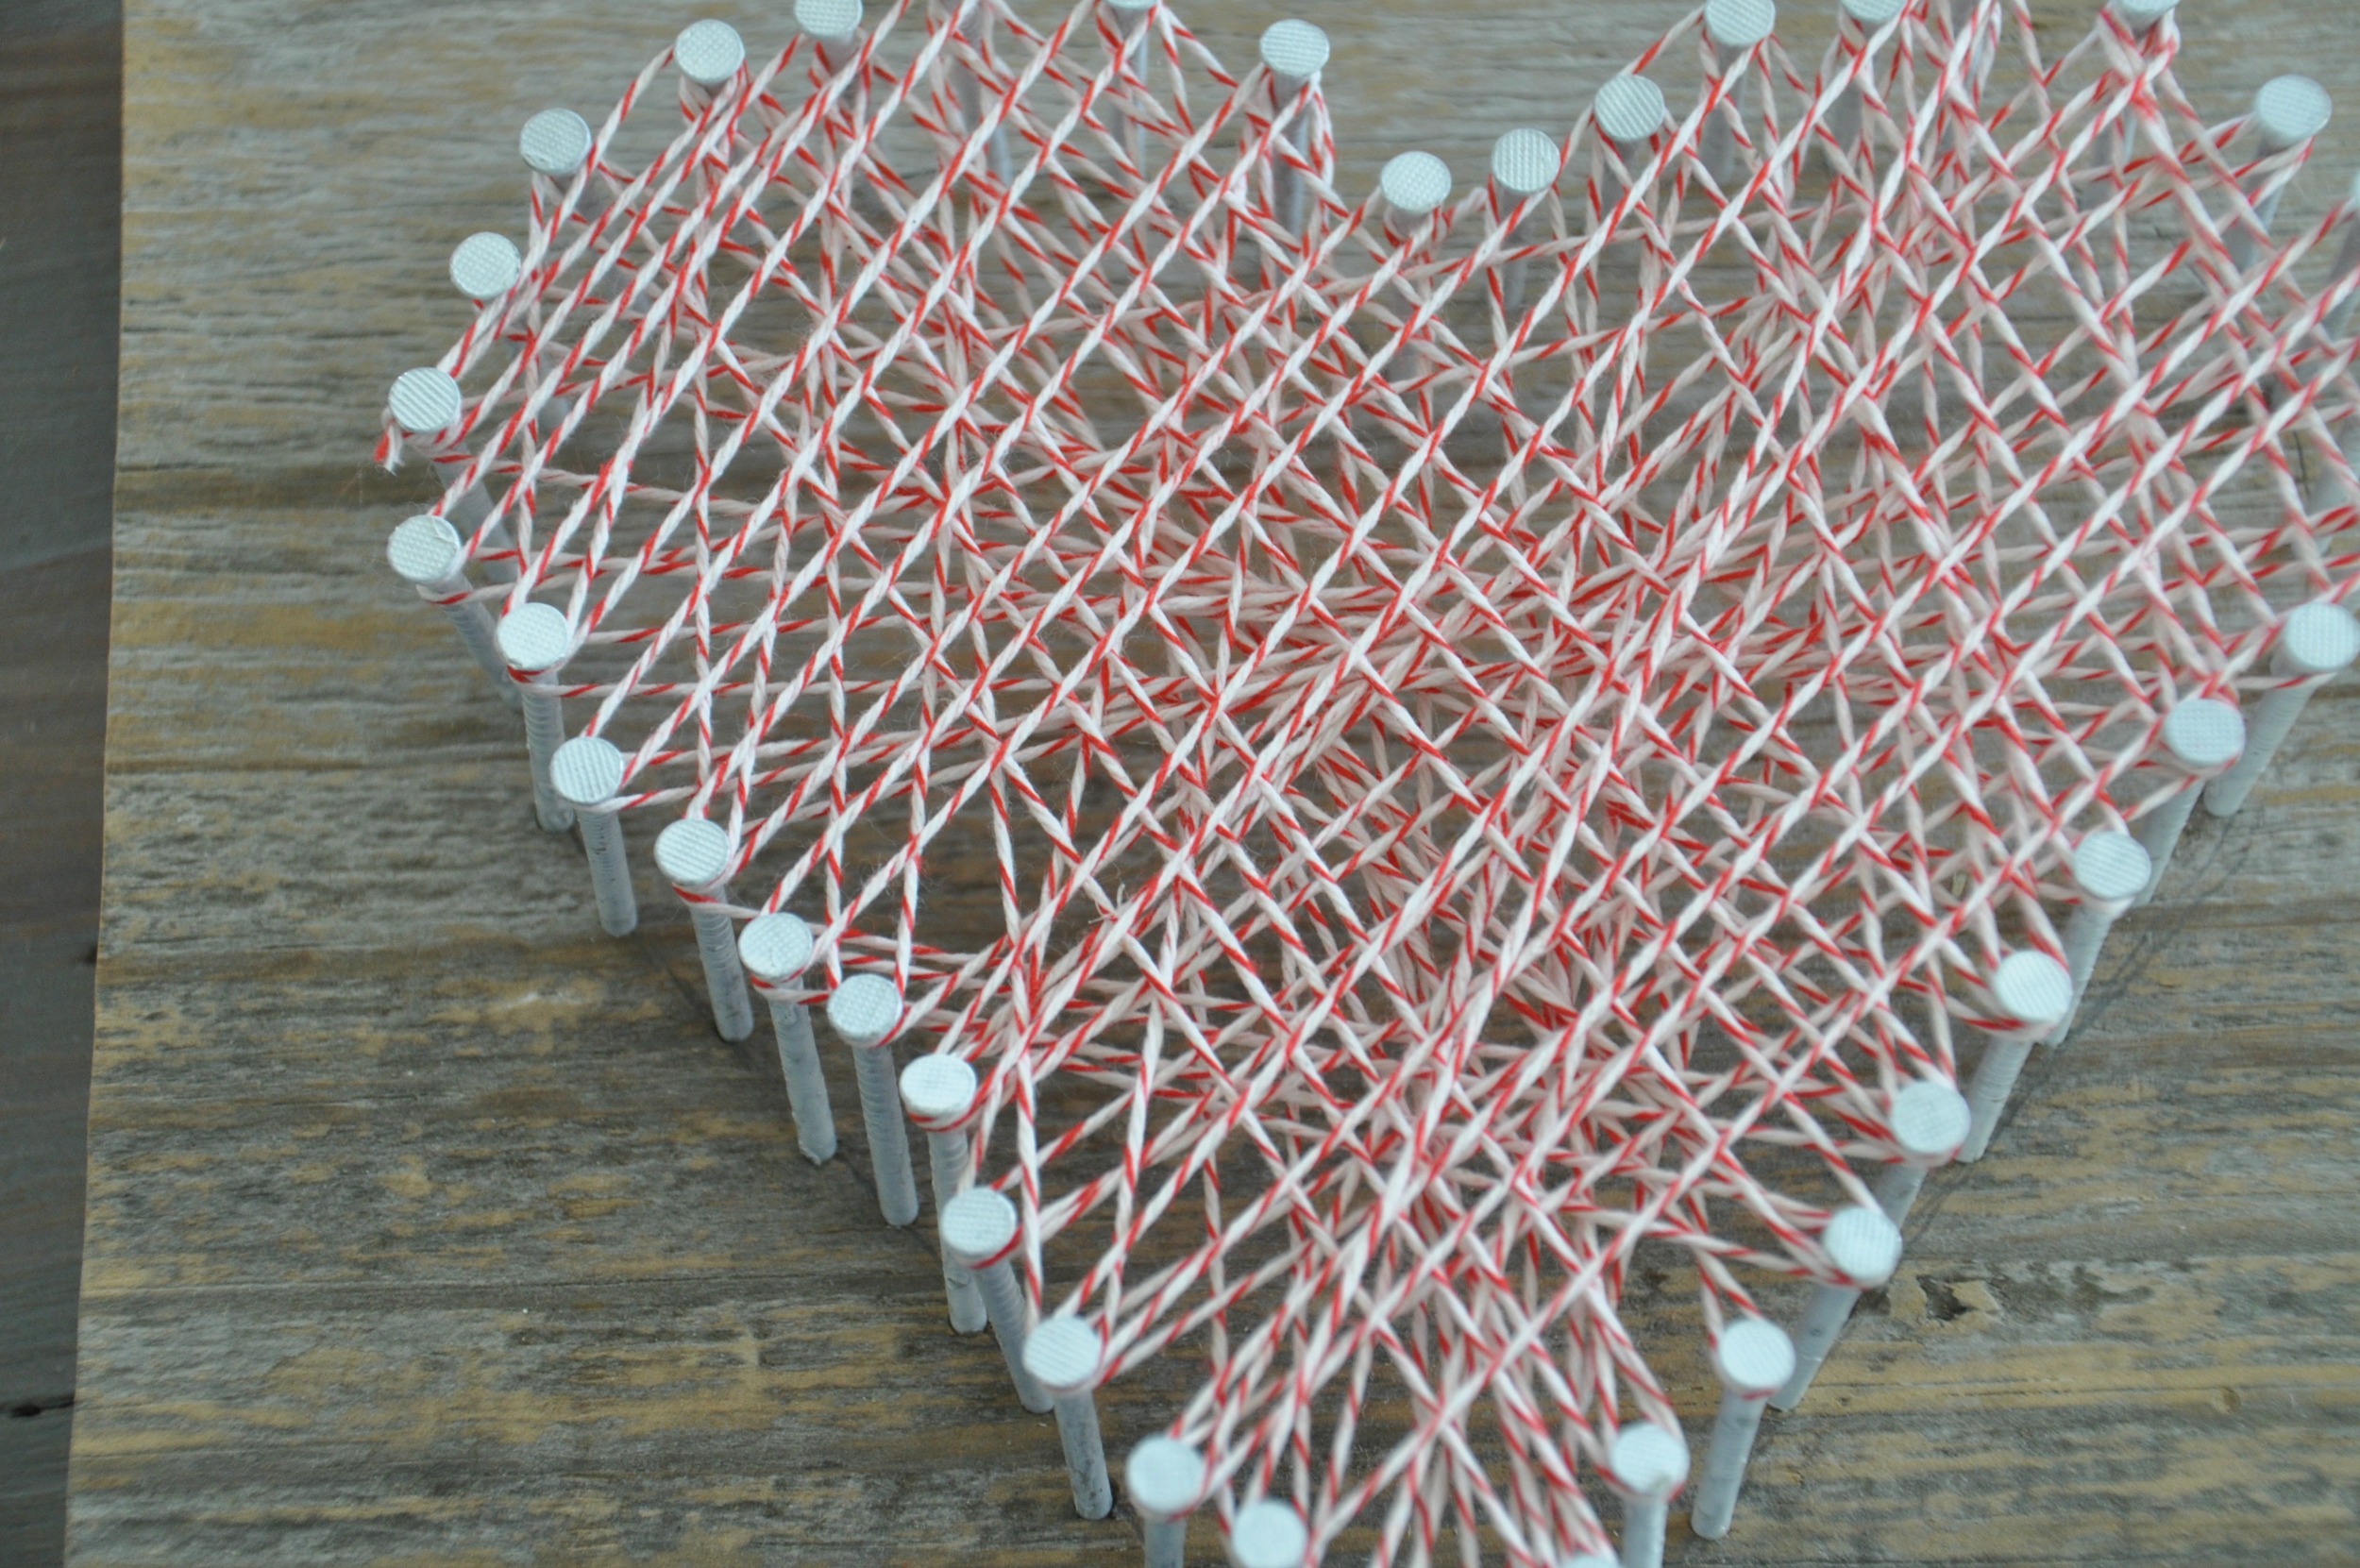 Cardboard Heart String Art (No Nails, Wood or Tacks) - Happy Hooligans